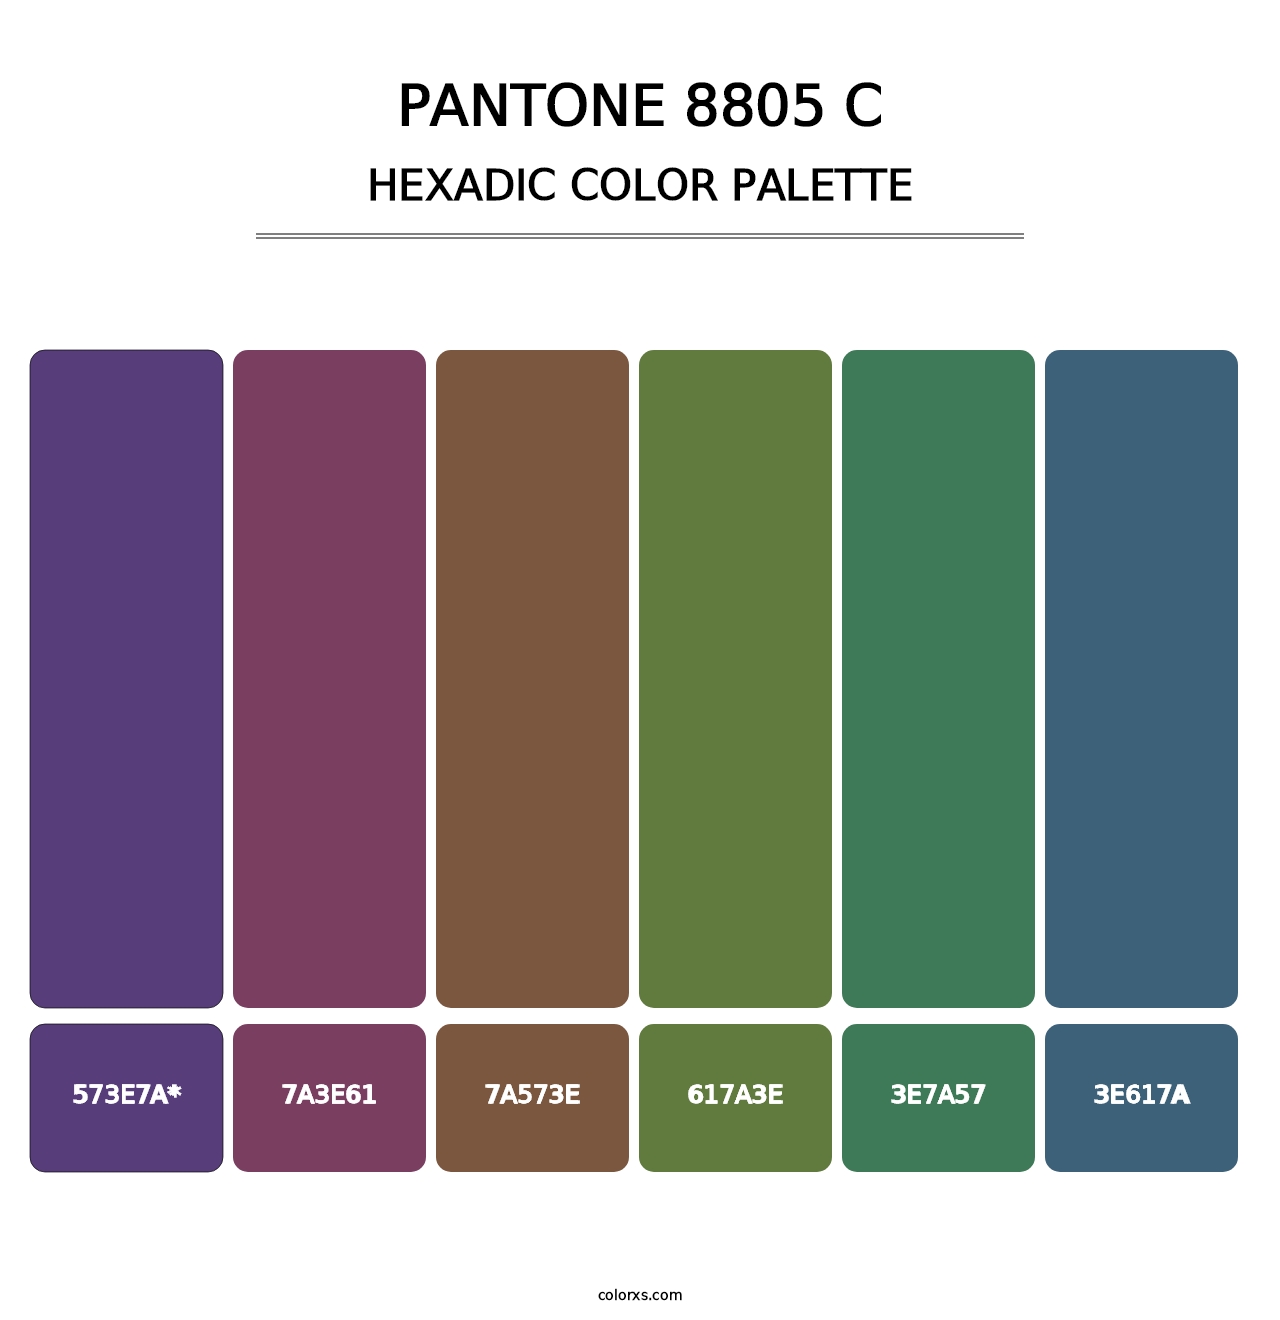 PANTONE 8805 C - Hexadic Color Palette